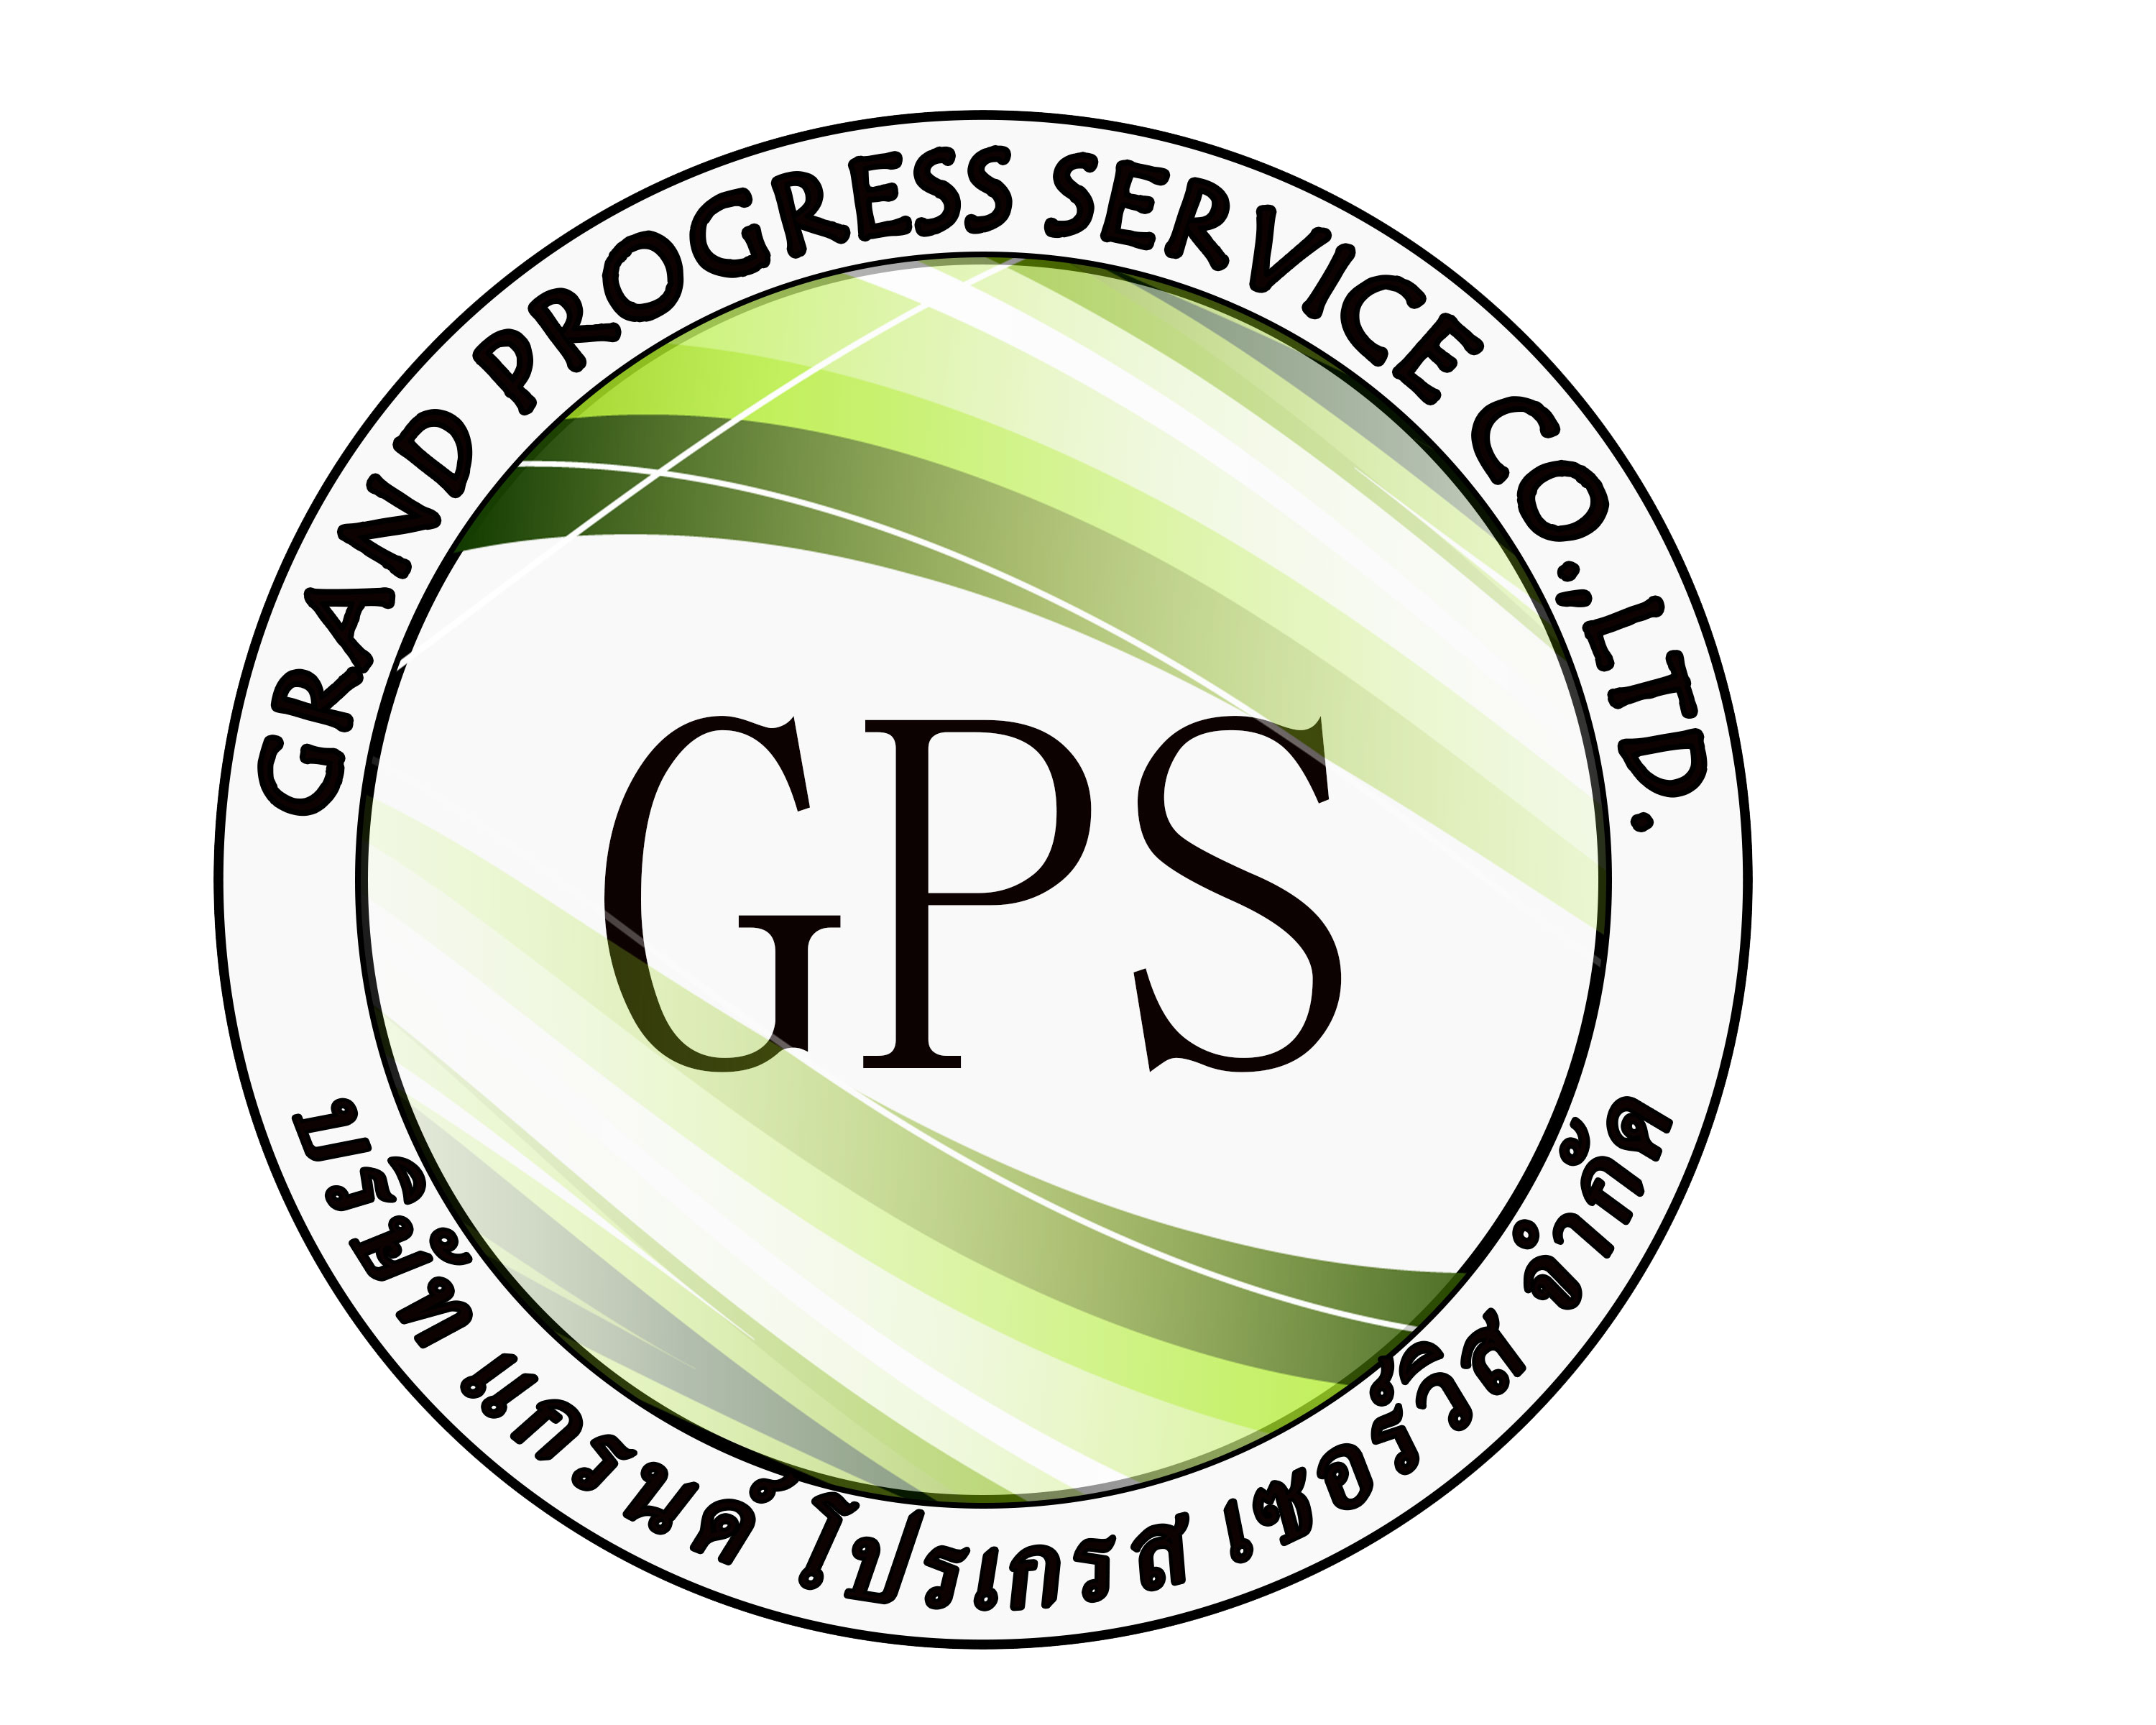 Grand Progress Service